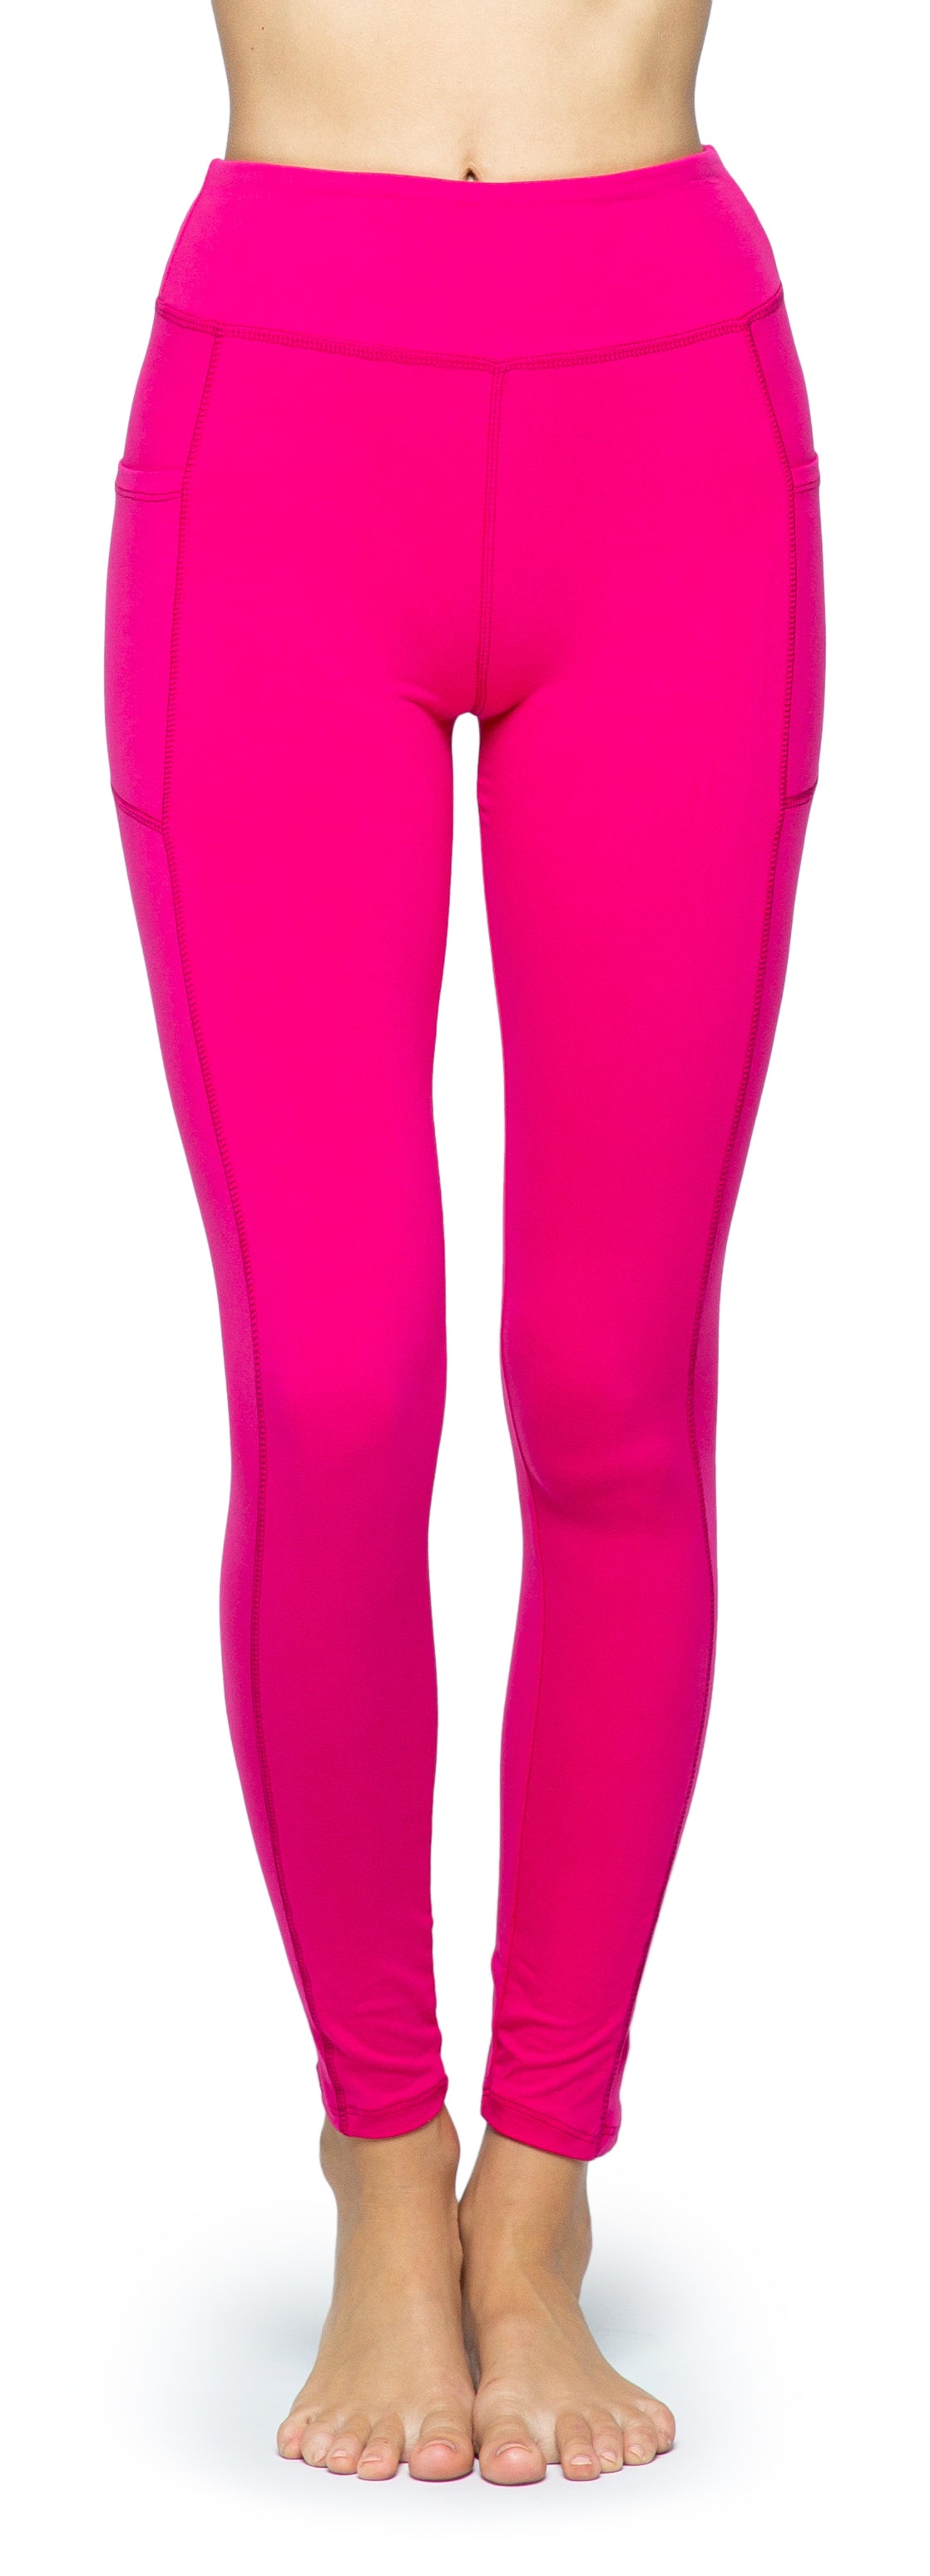 QUANBU Women's Solid Color Yoga Sports Fitness Leggings Nine Points Pants Pink  XL Size